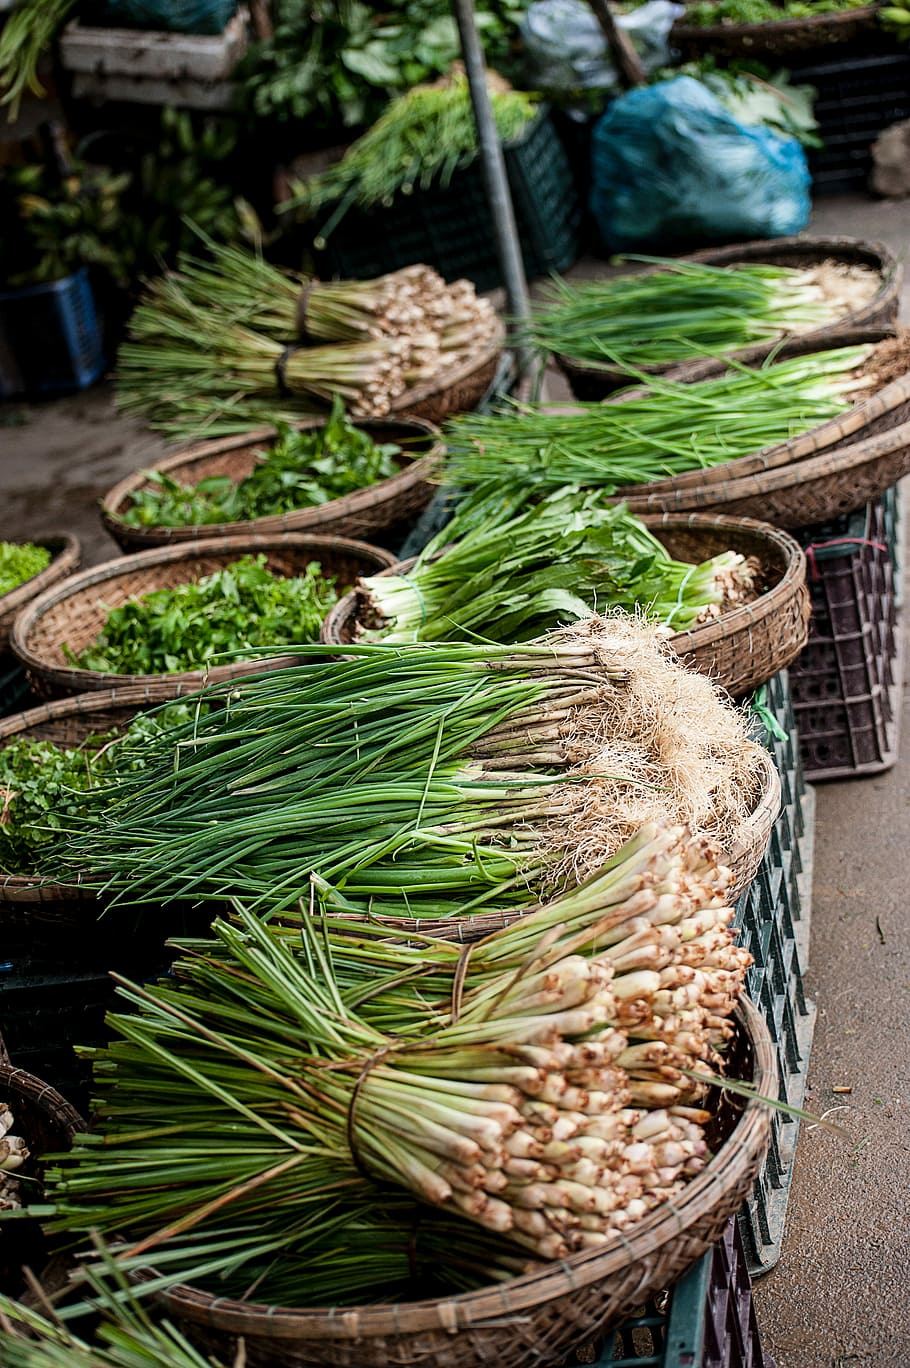 vegetable market, Vegetable, market, basket, baskets, food market, green, herb, herbs, onion